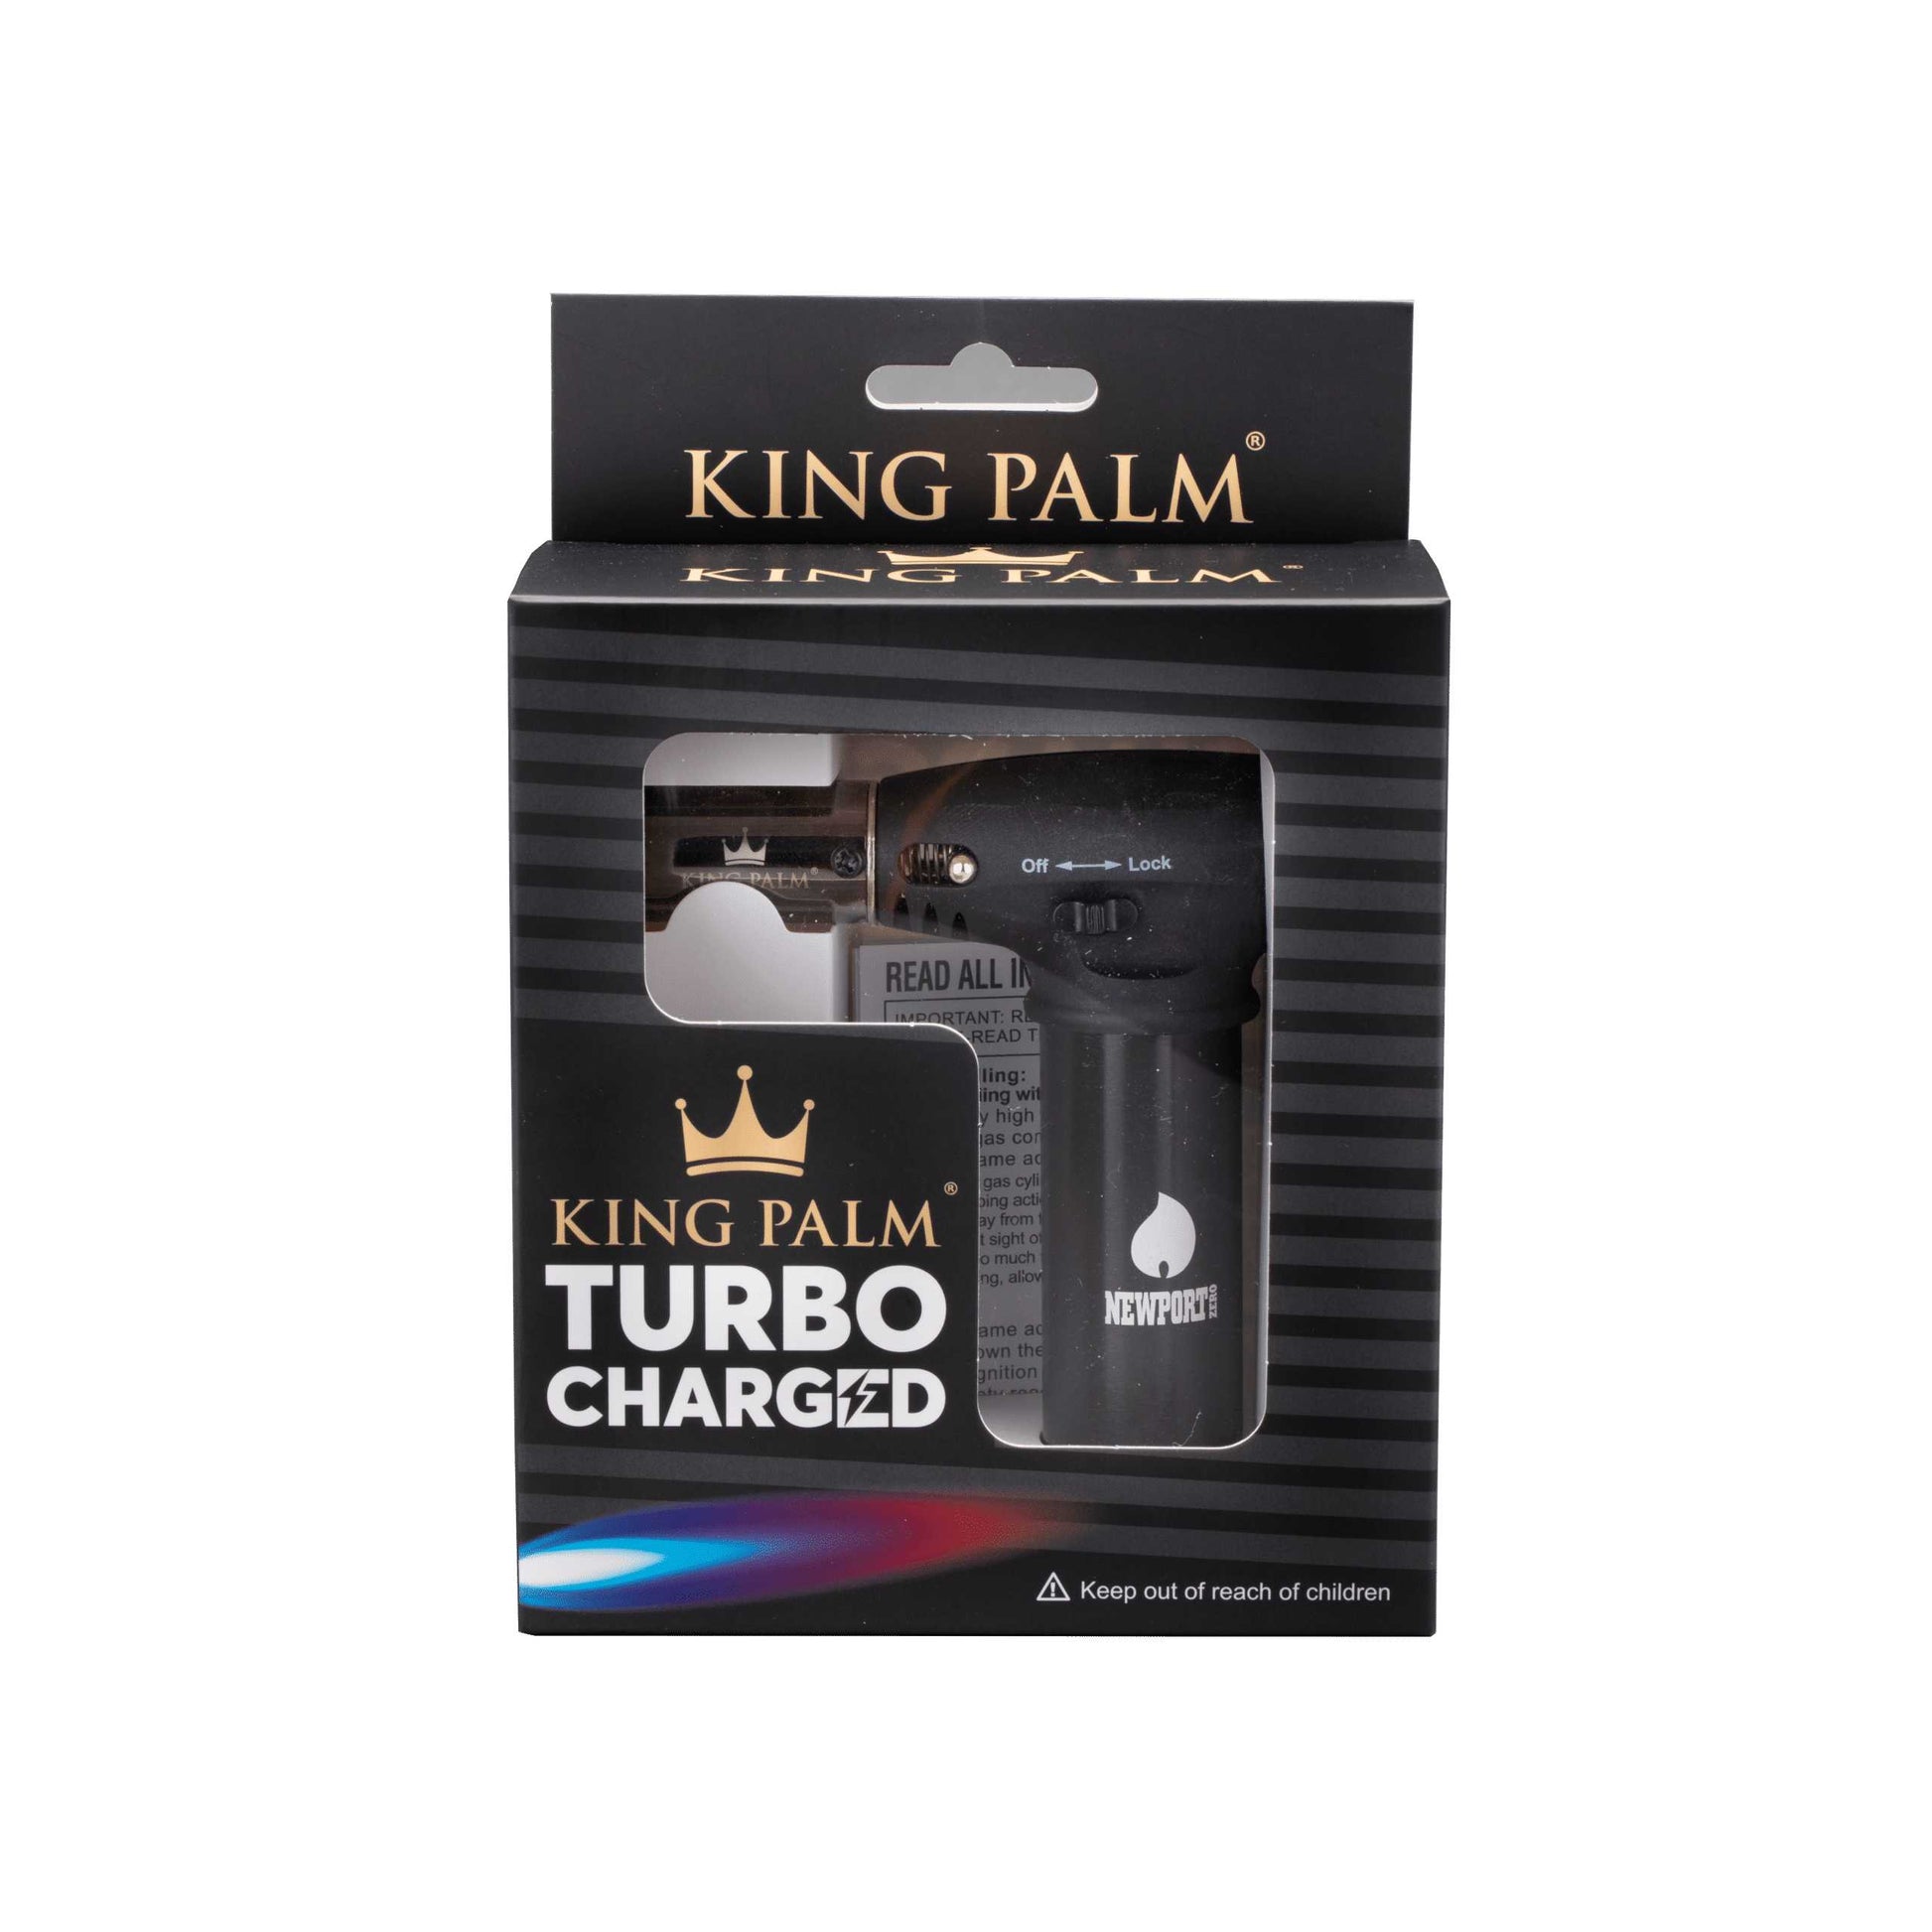 King Palm Turbo Charged Jet Lighter - Jet Lighter - King Palm - Cali Tobacconist